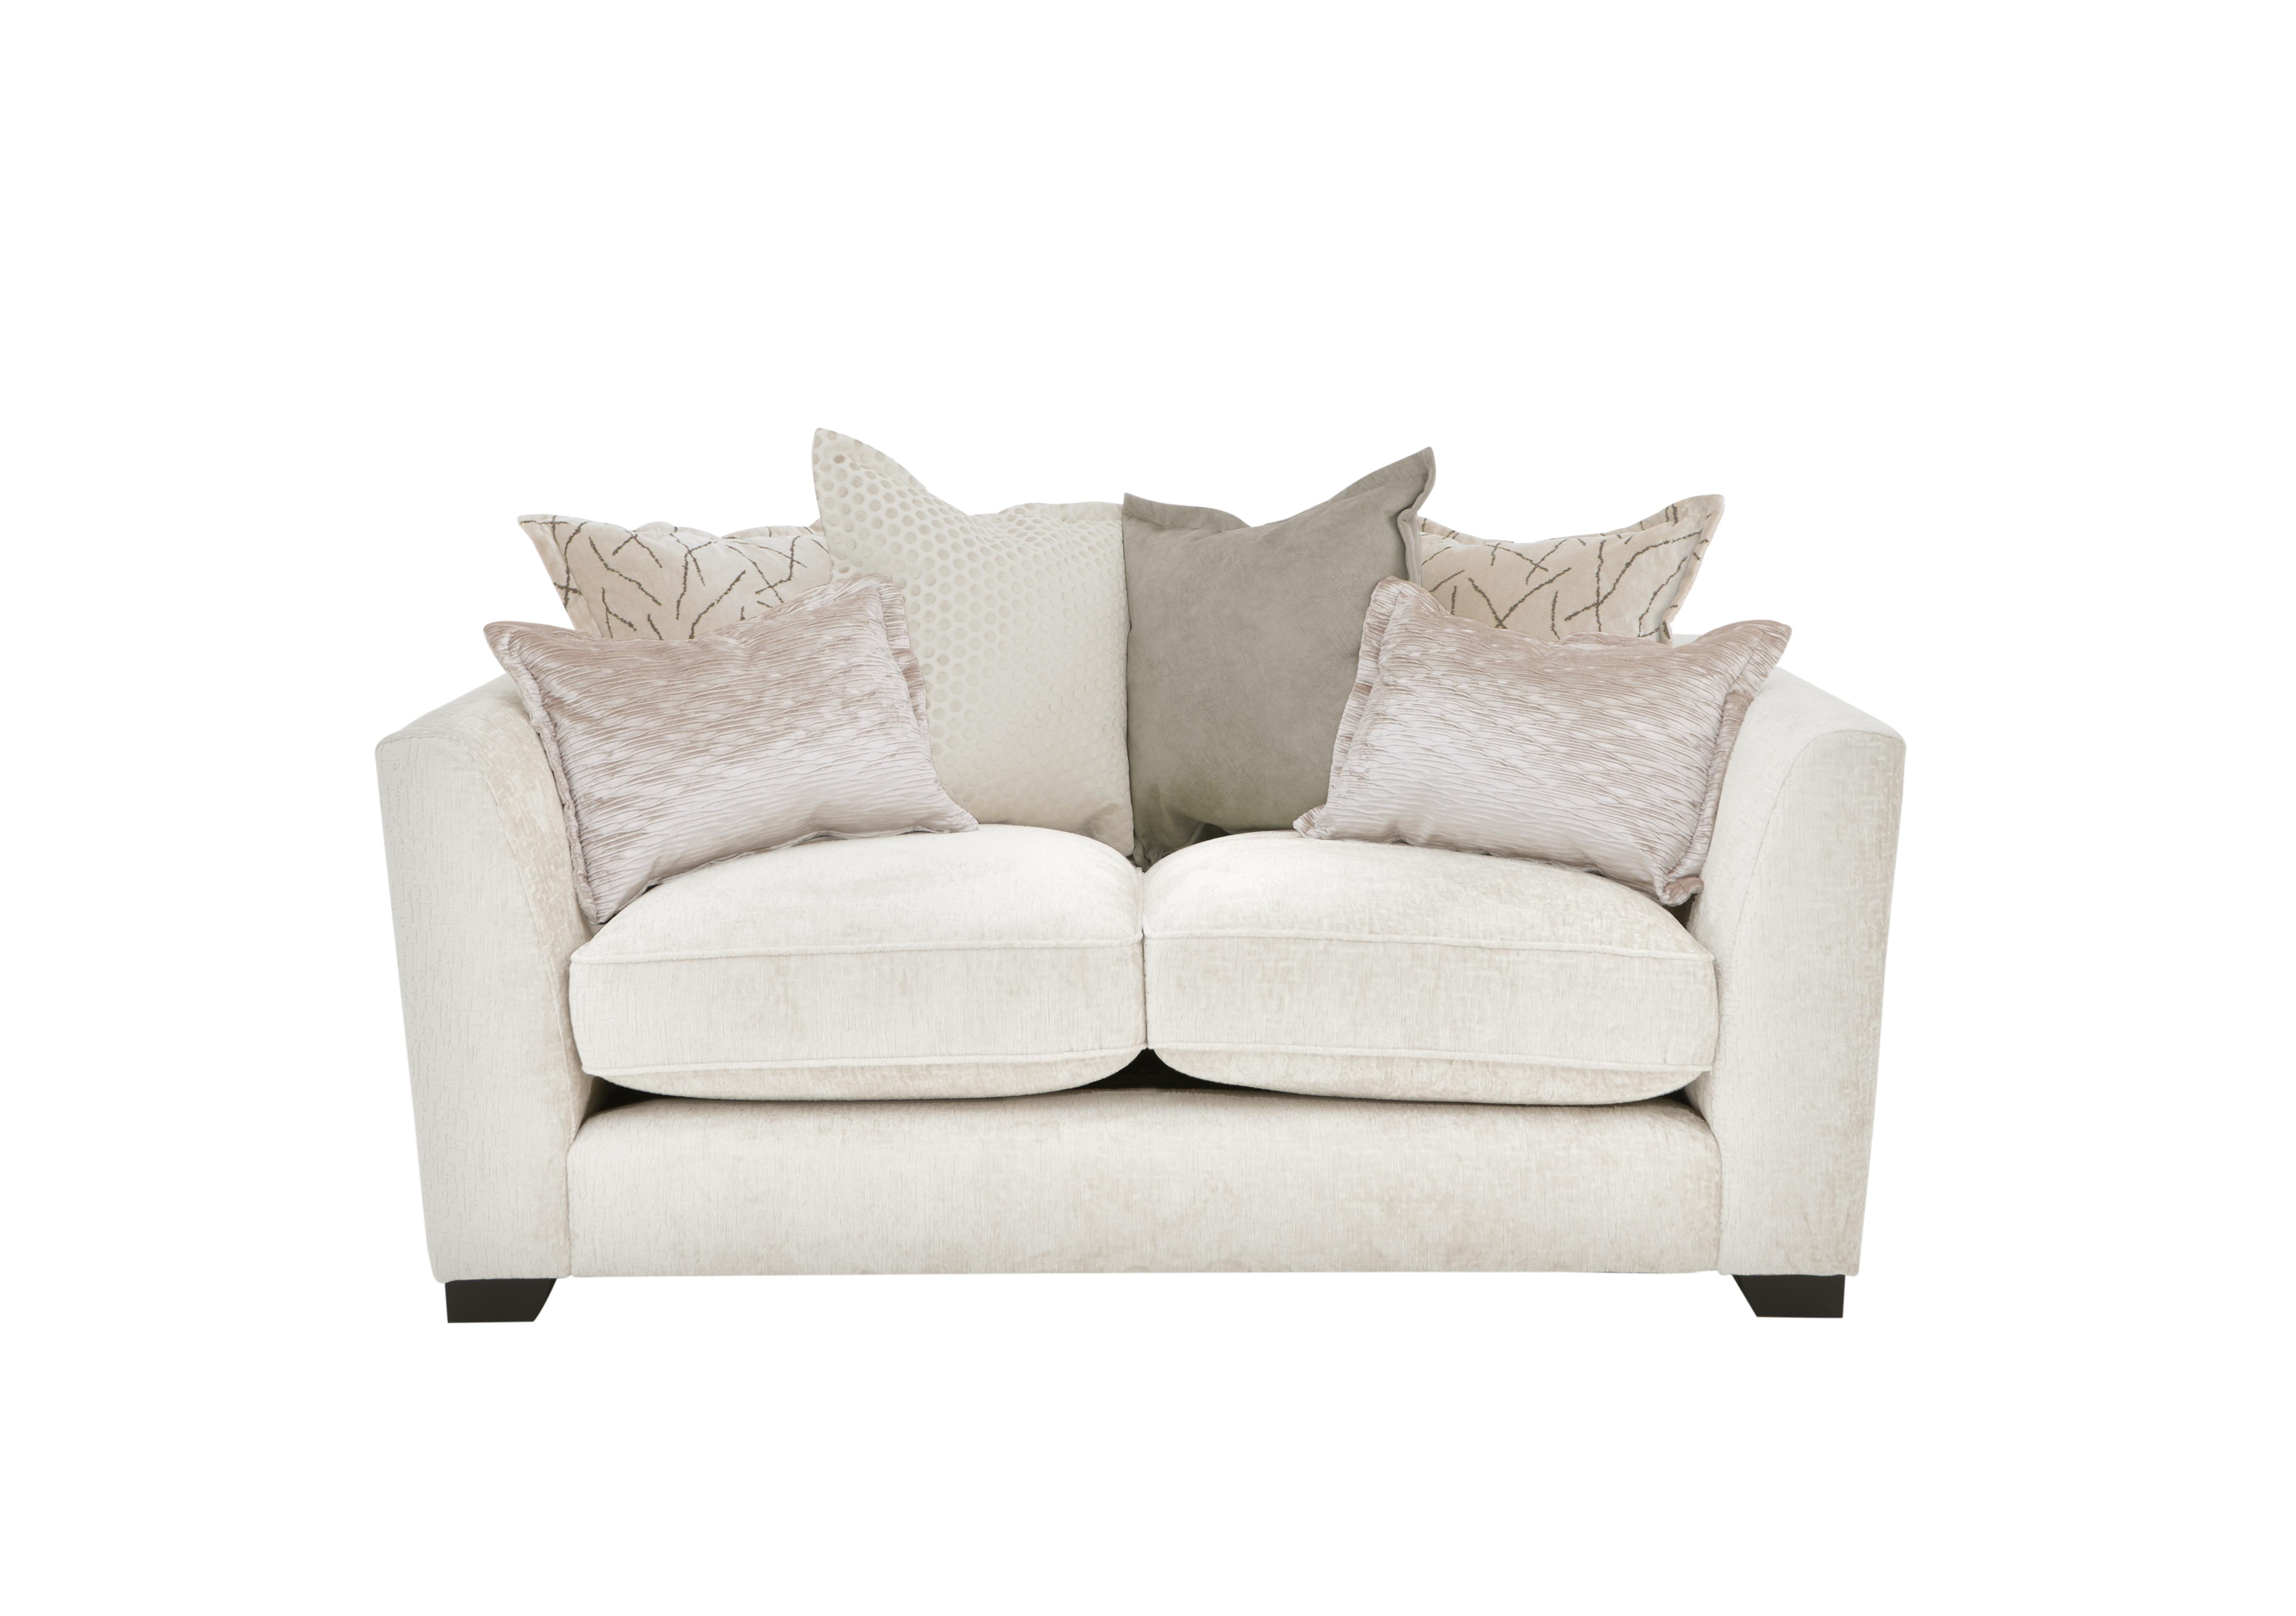 Boutique Lavish Fabric 2 Seater Scatter Back Sofa in Alexandra Ecru on Furniture Village